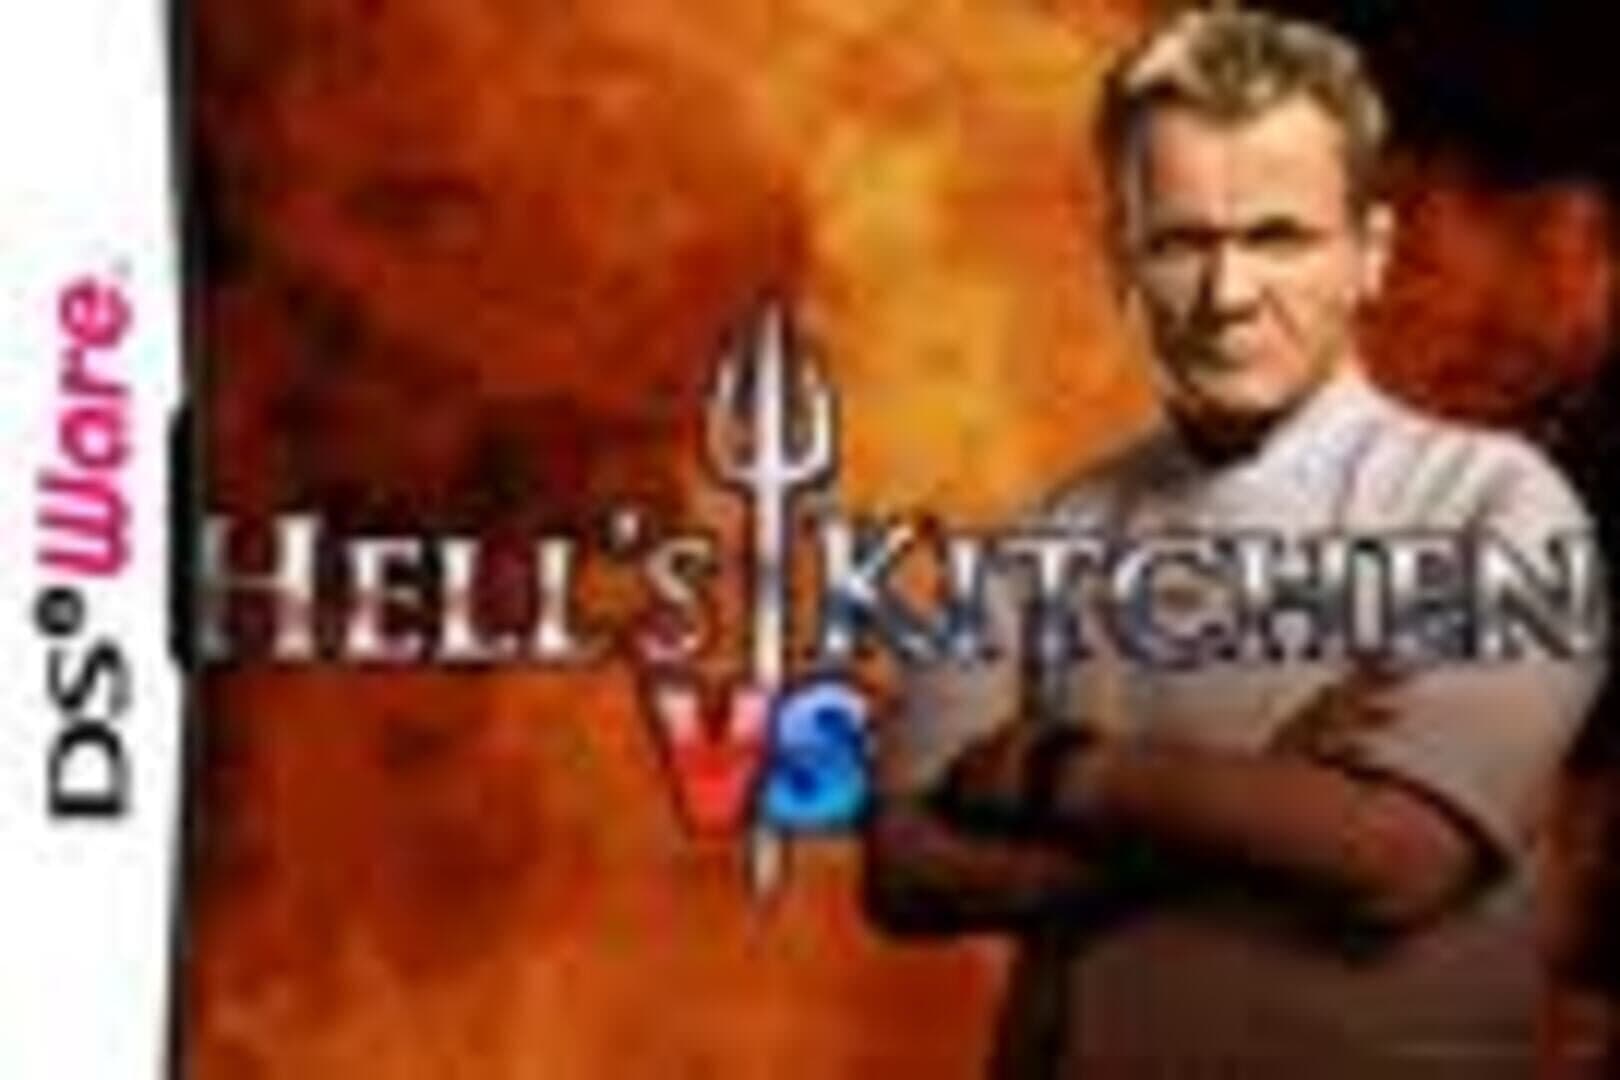 Hell's Kitchen Vs. cover art